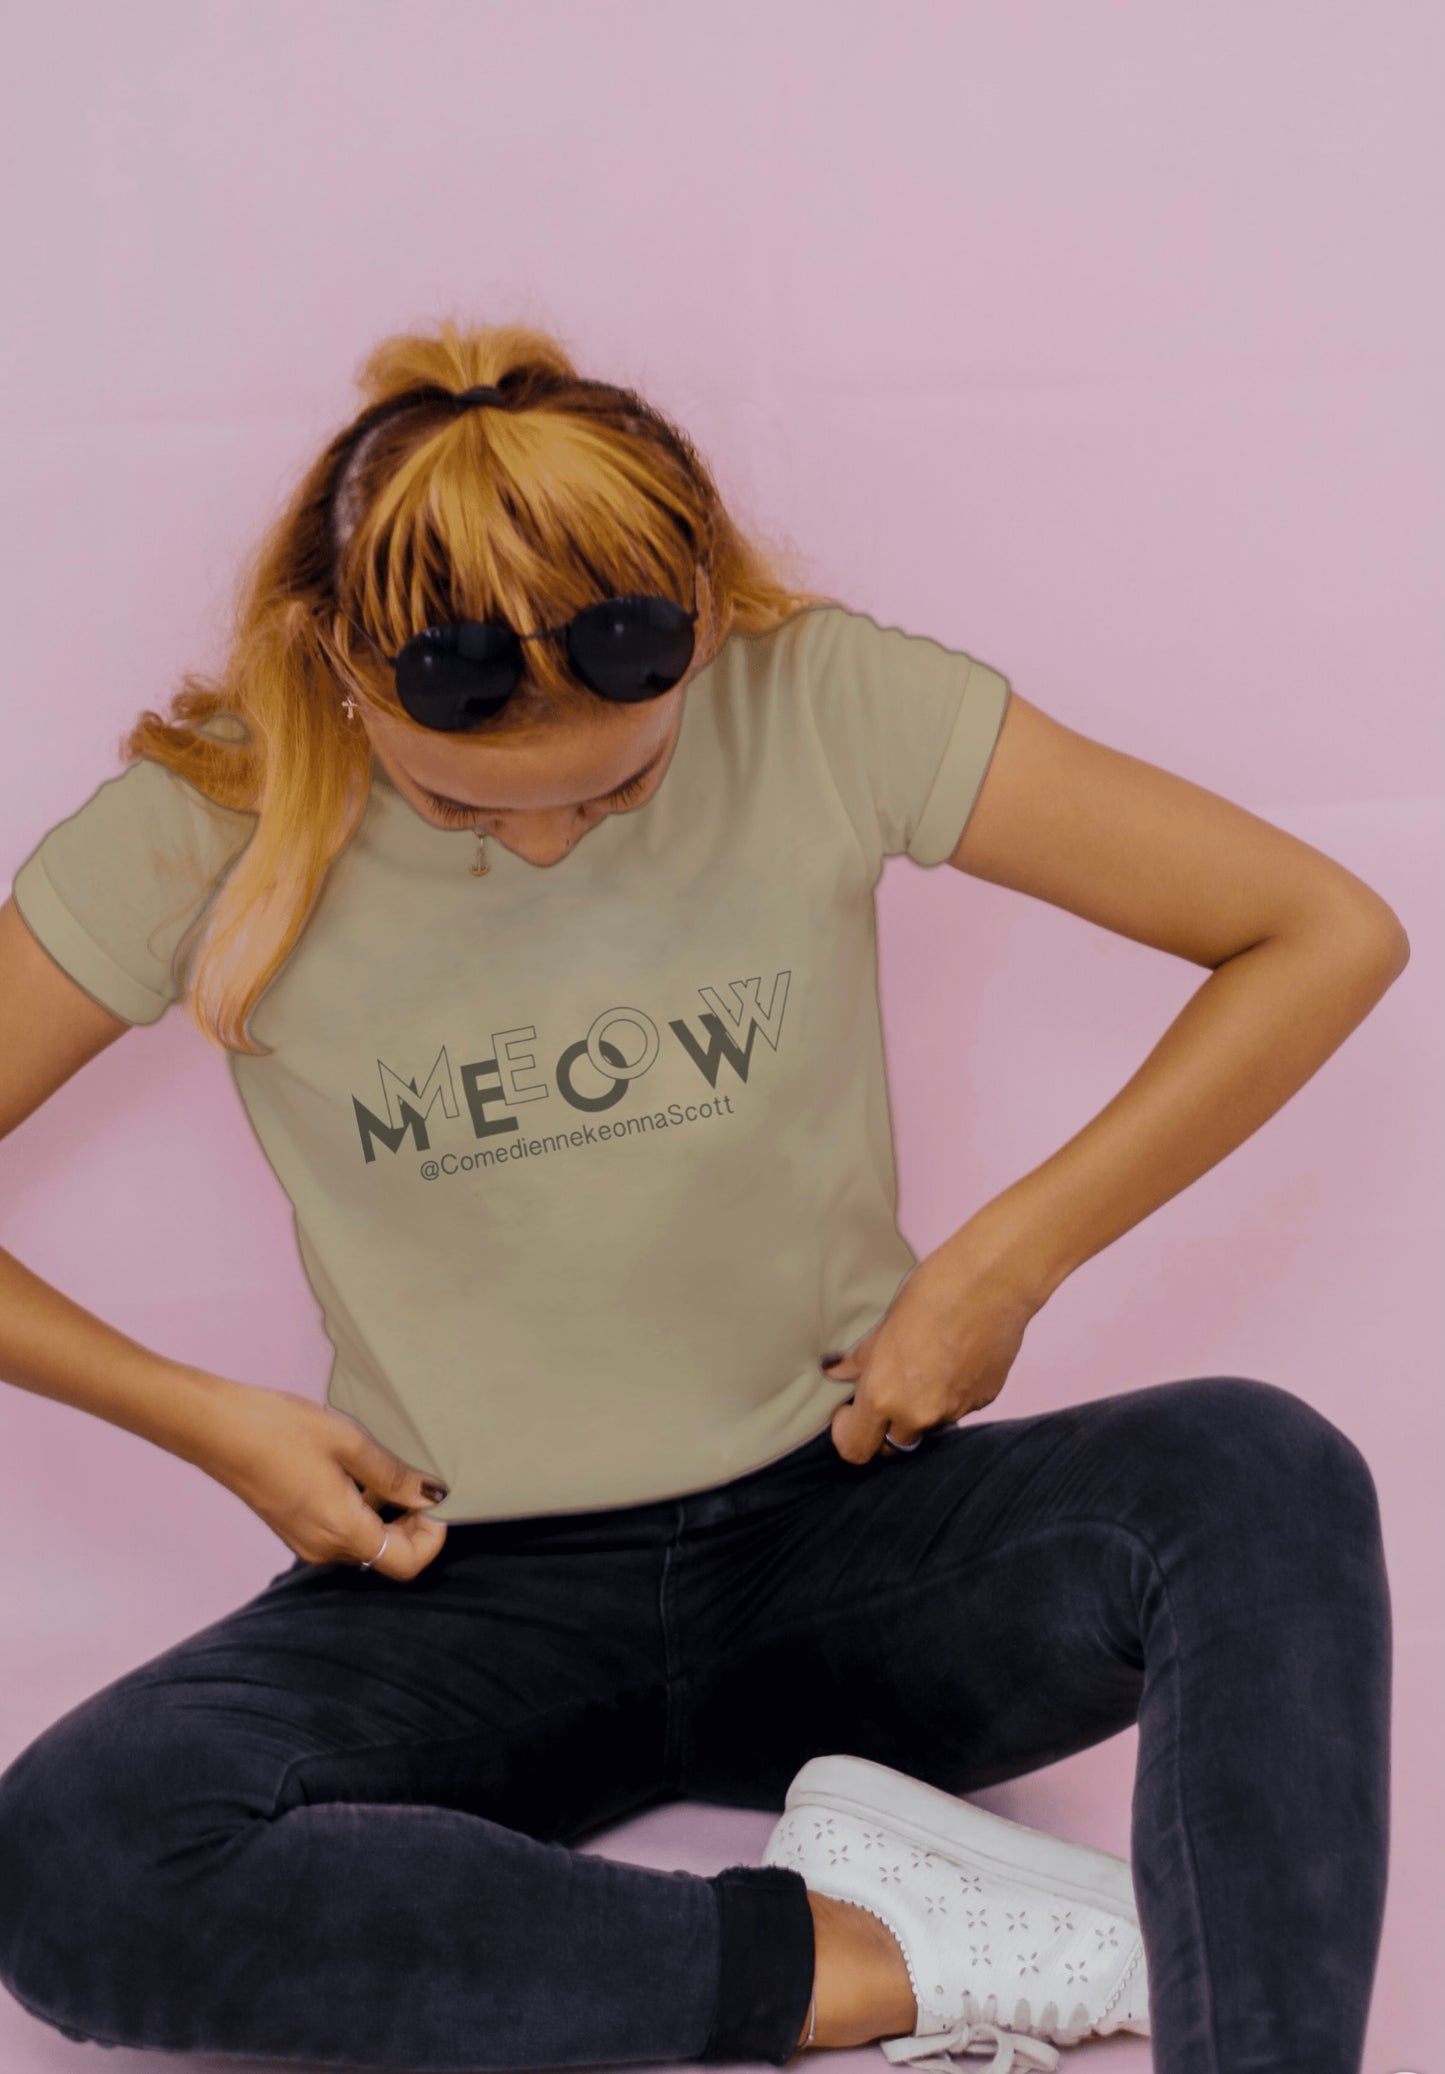 Meow shirts